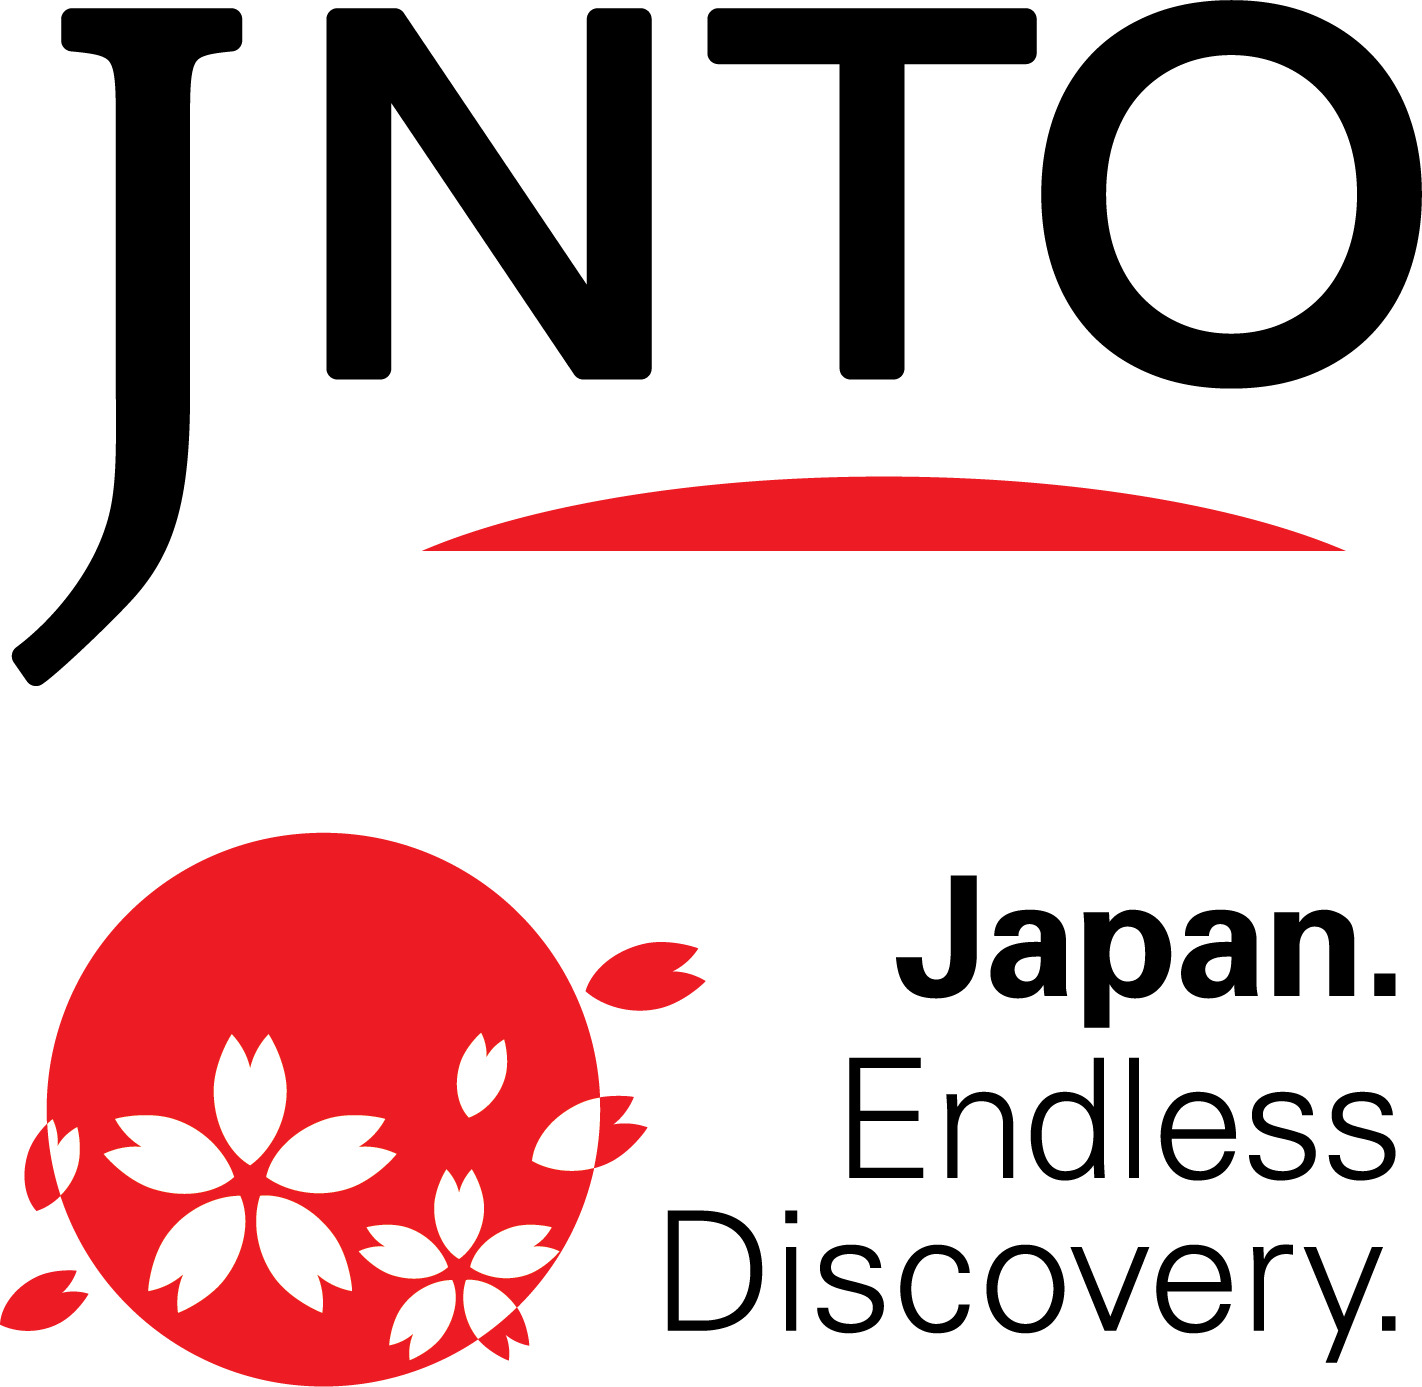 Japan - A Technological Tour - Japan National Tourism Organization